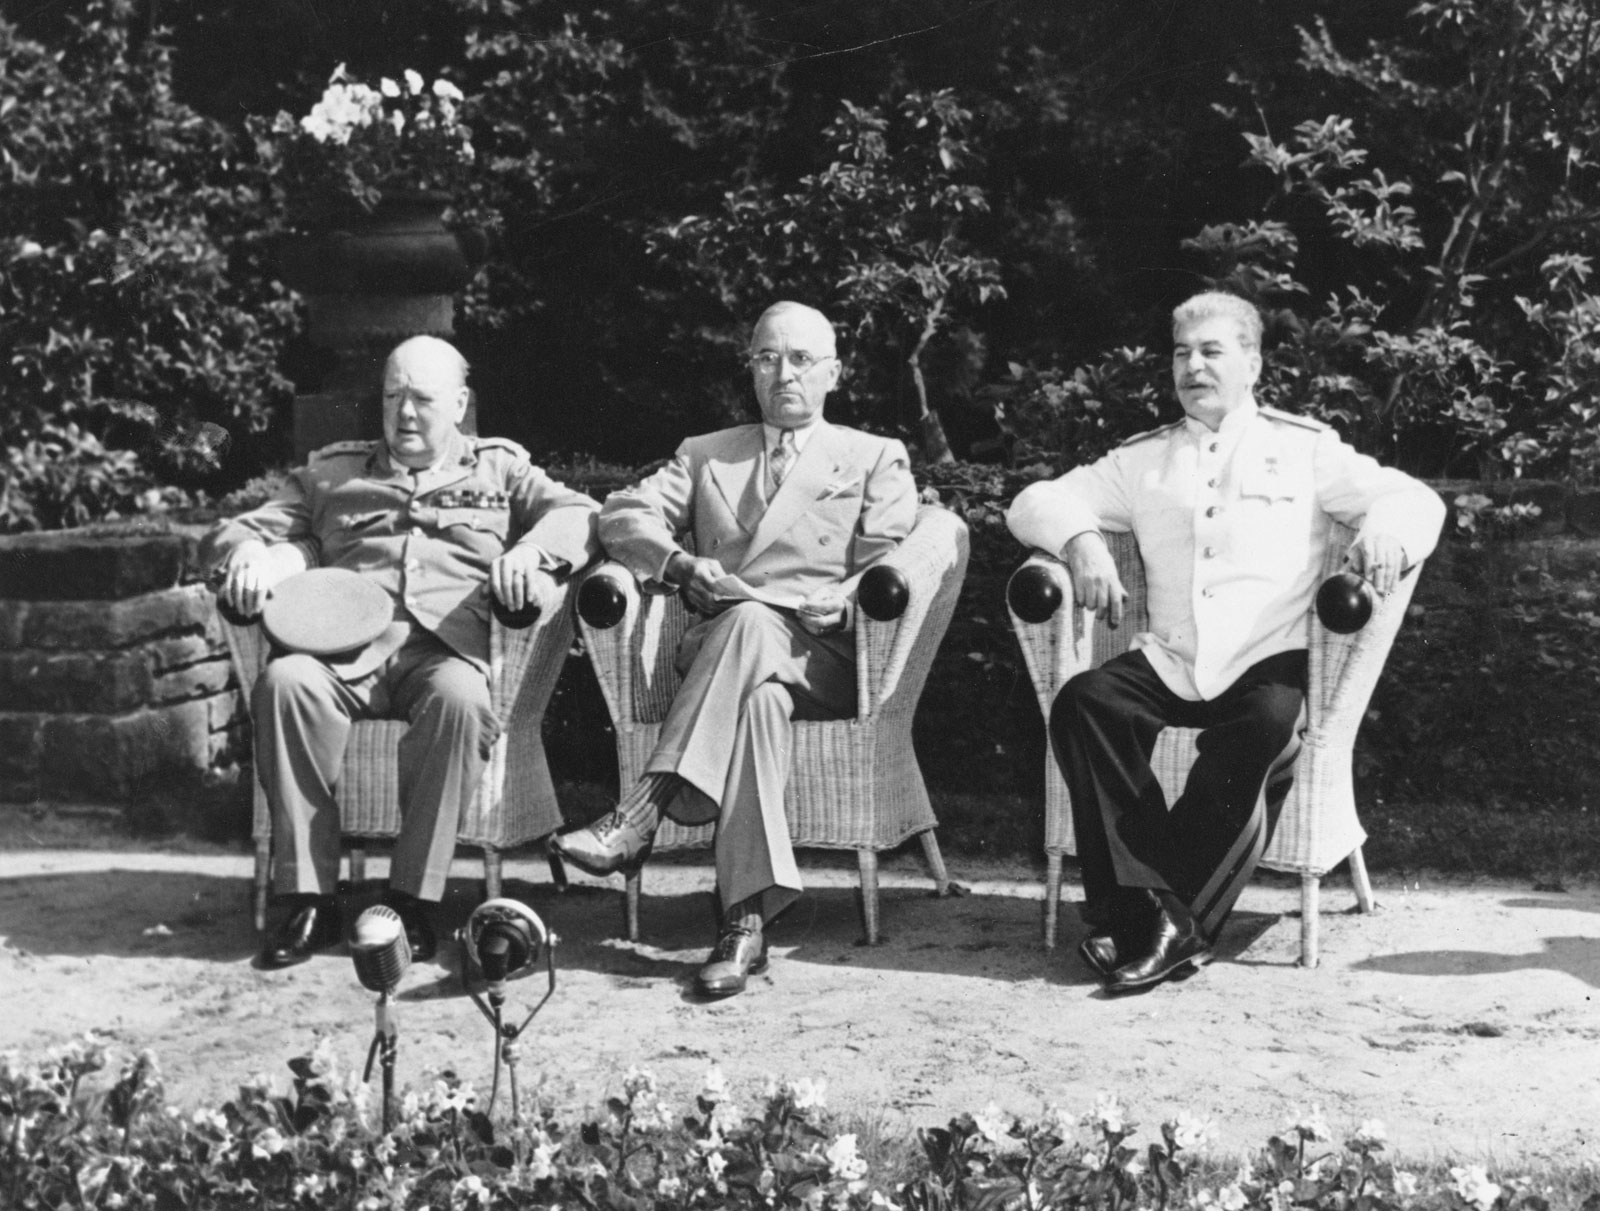 Postdam Conference in 1945